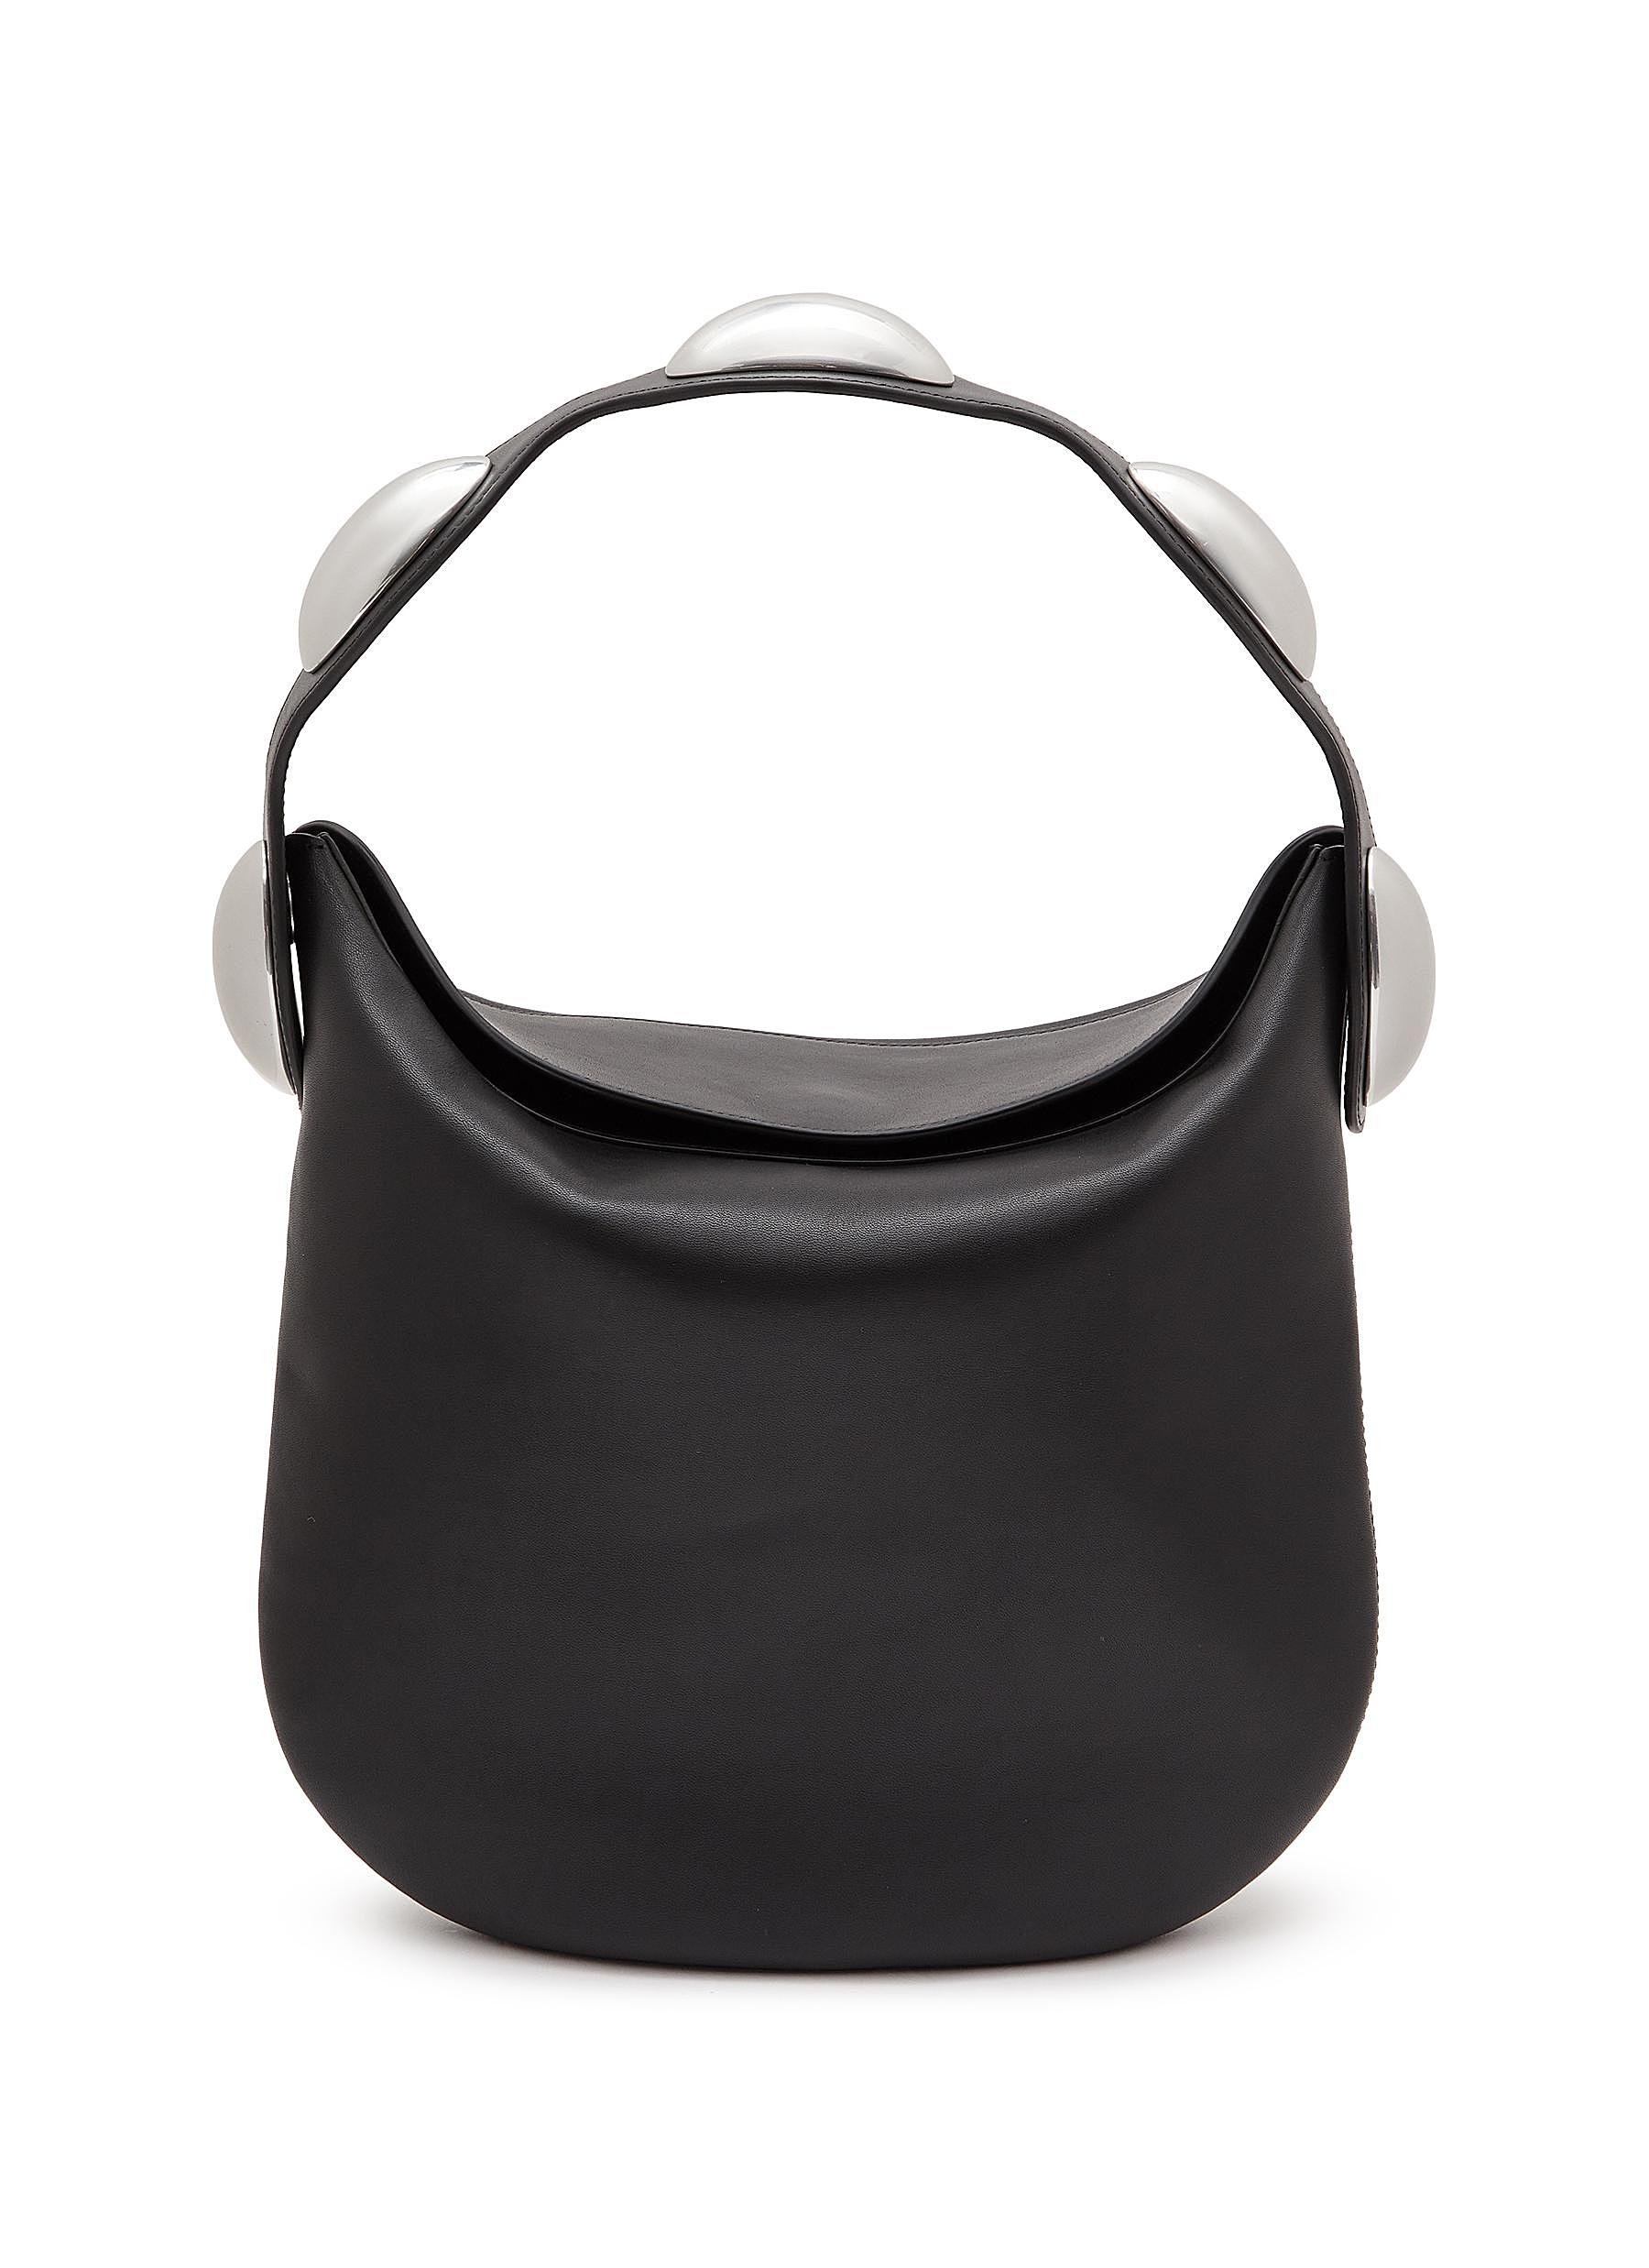 ALEXANDER WANG Small Dome Leather Shoulder Bag